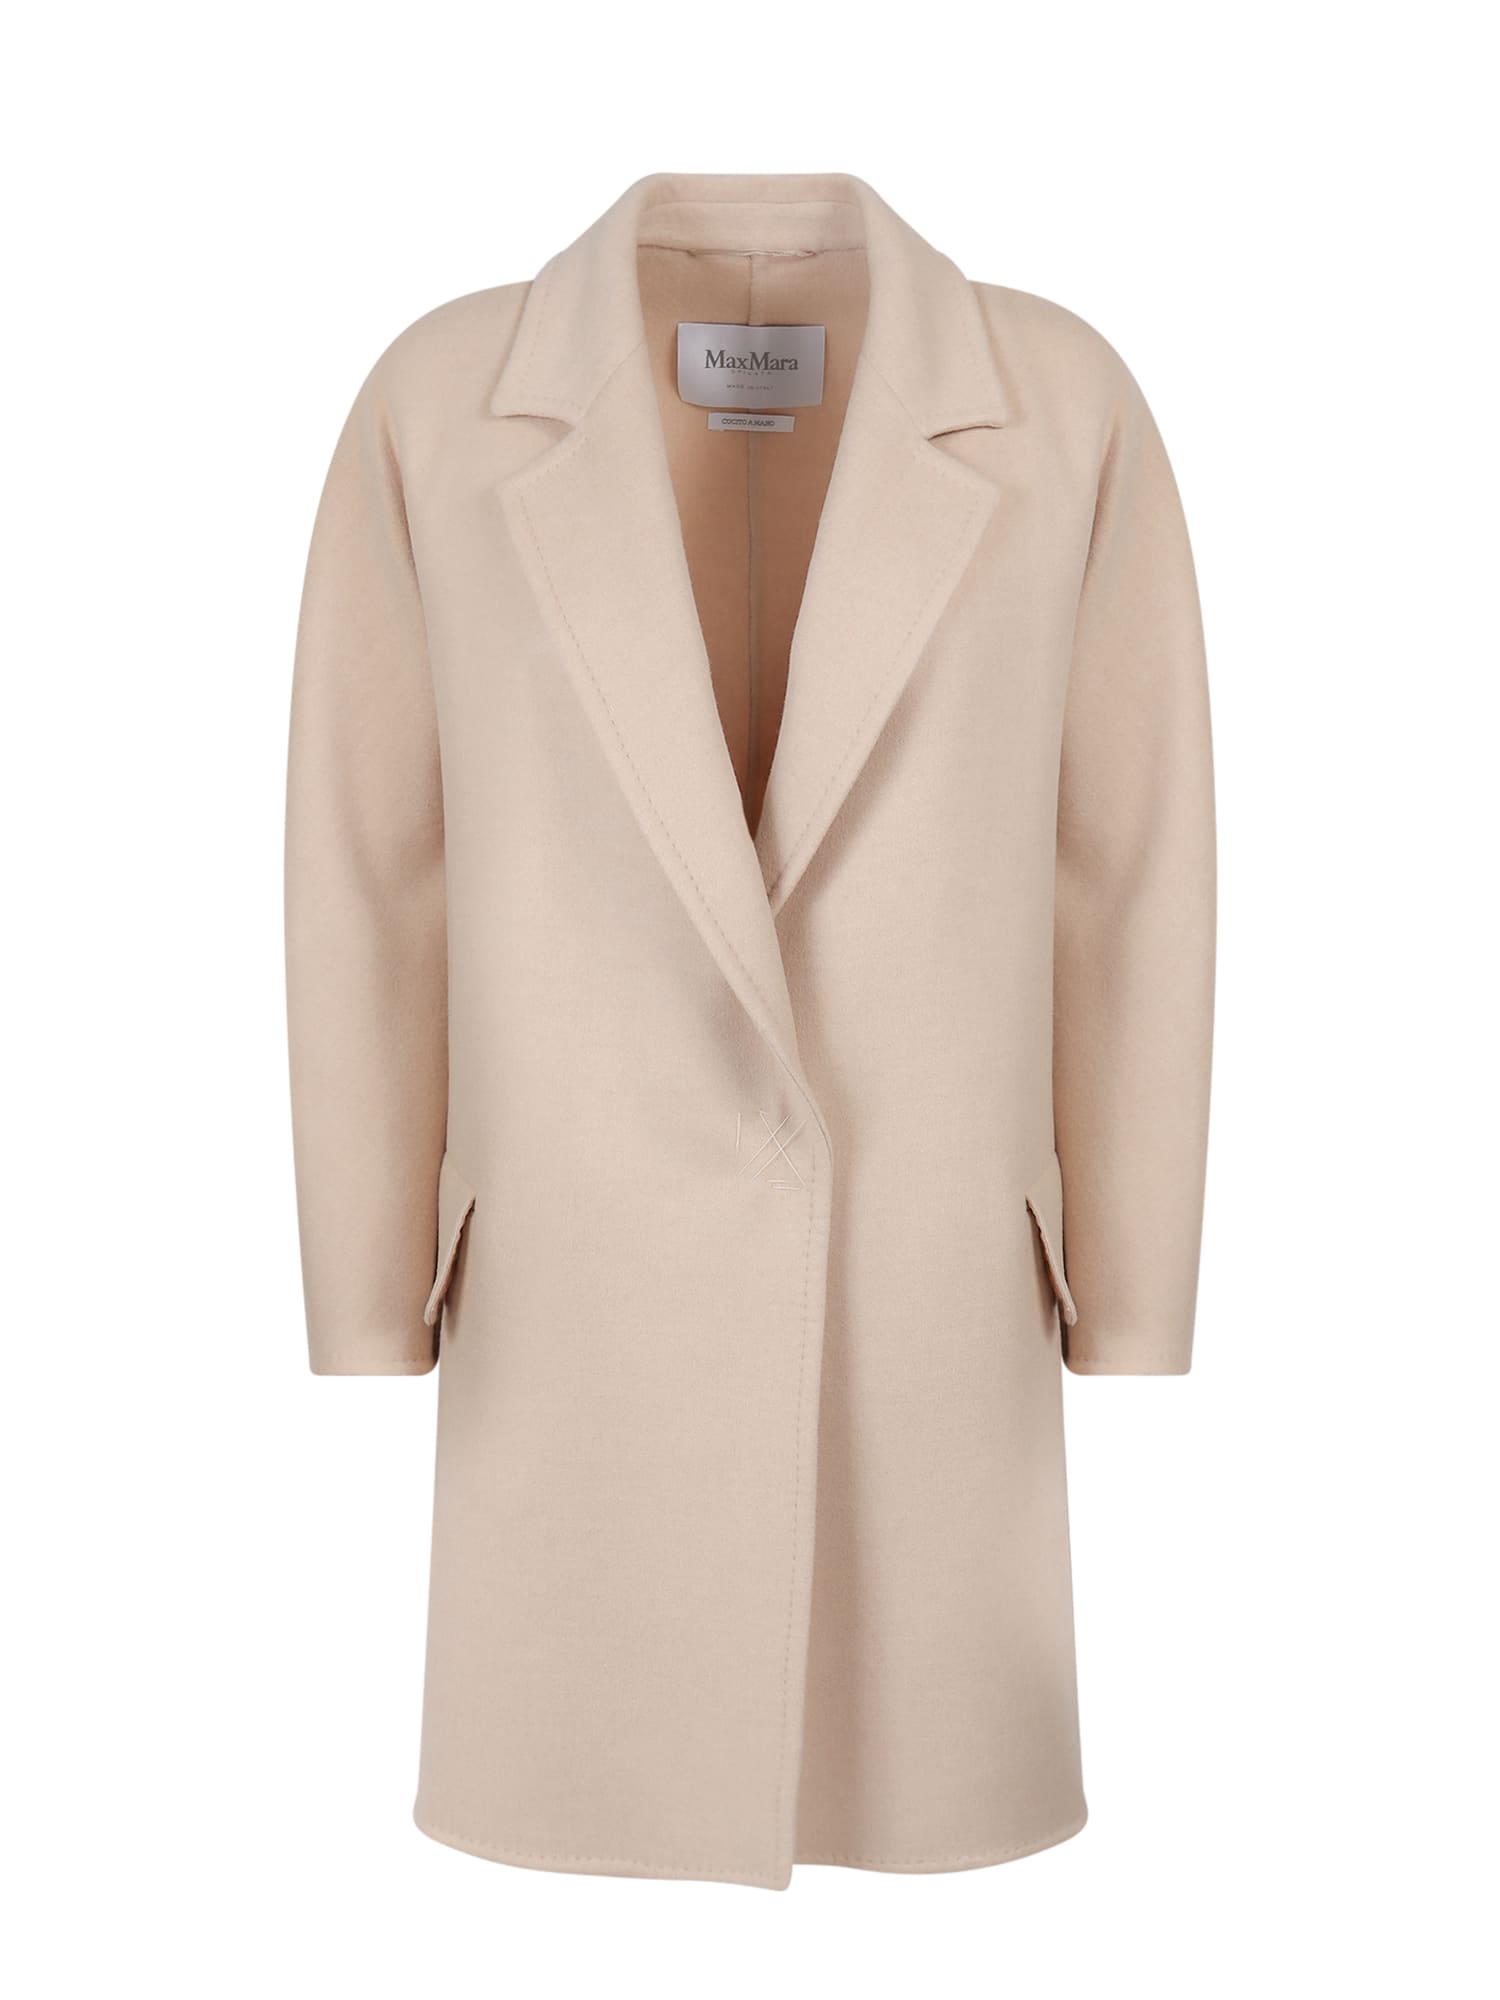 Women's MAX MARA Coats On Sale, Up To 70% Off | ModeSens